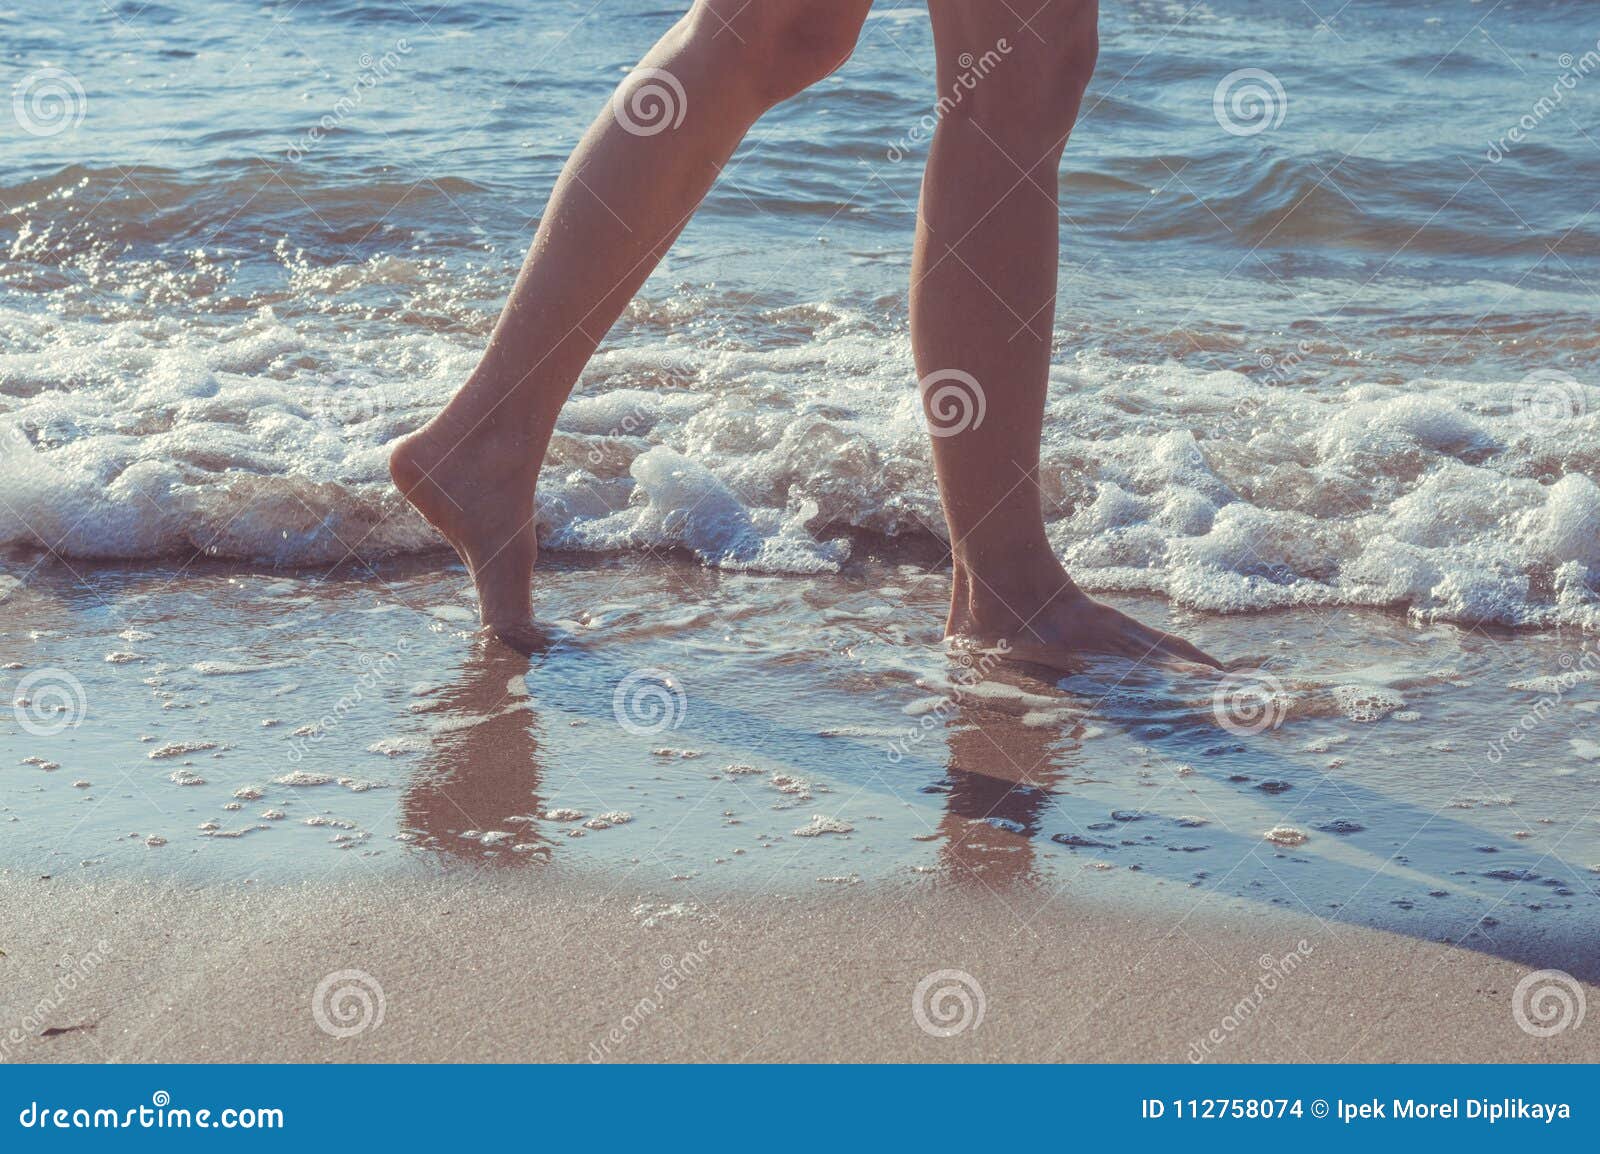 Woman Walking Barefoot On Ocean Beach Stock Image - Image 